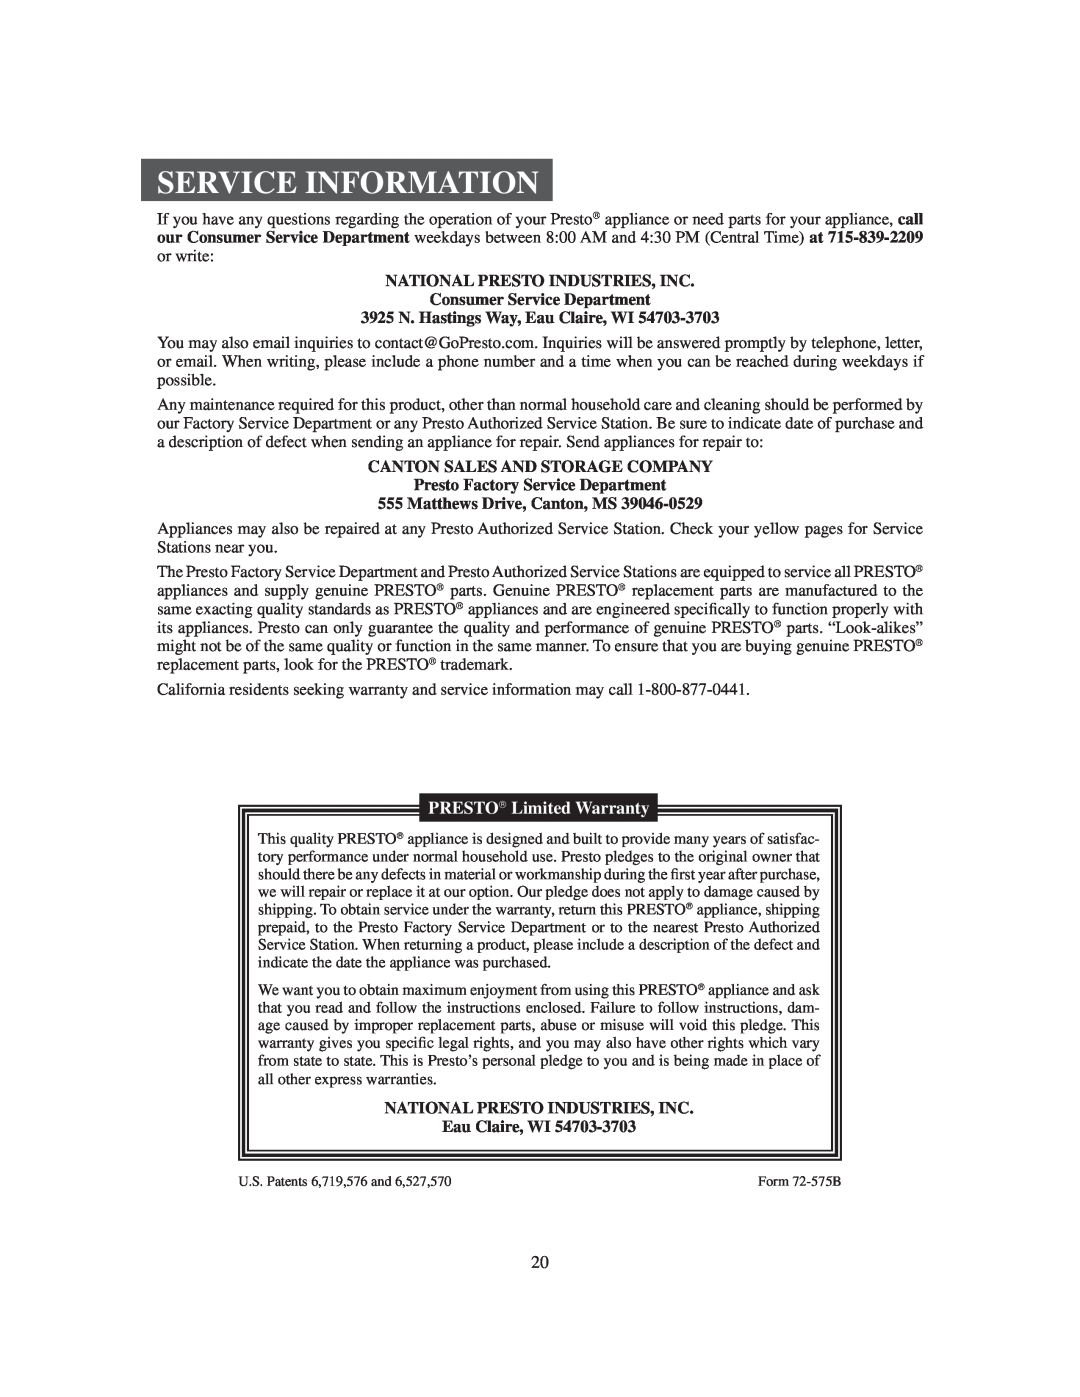 Presto Electric multi-cooker manual Service Information, NATIONAL PRESTO INDUSTRIES, INC Consumer Service Department 